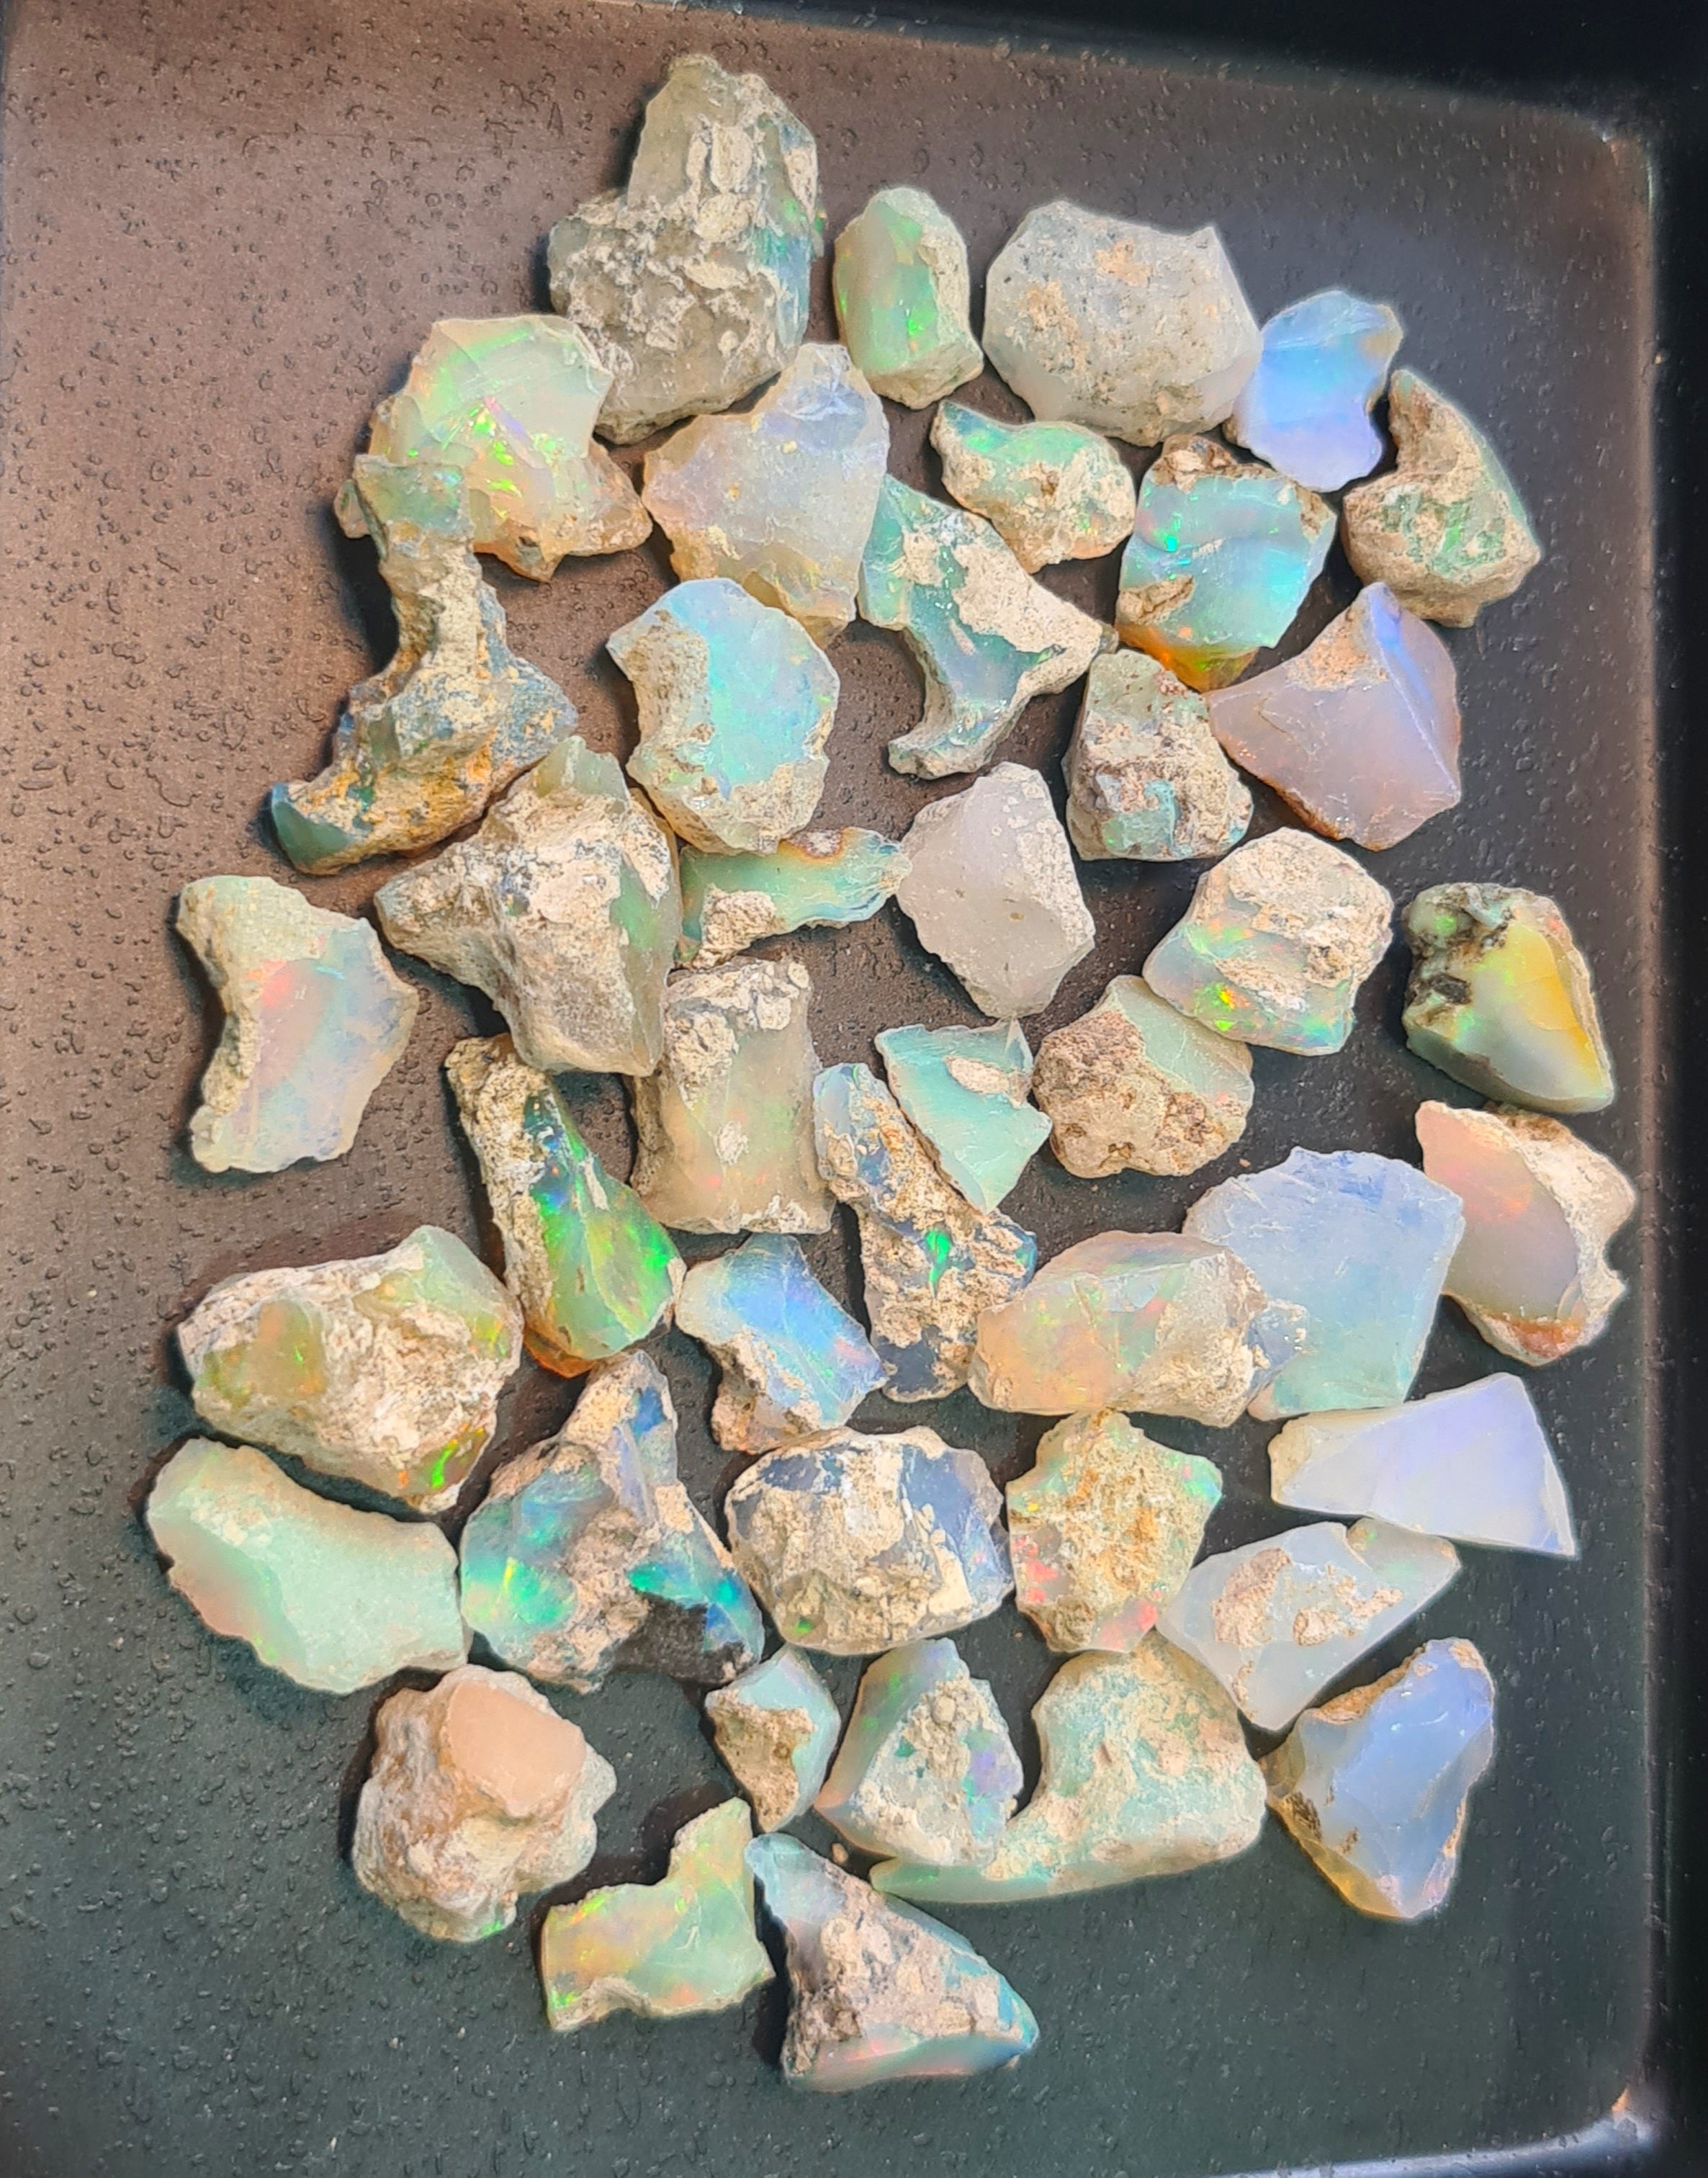 43 Pcs Natural  Ethiopian Opal Rough Gemstone Mix Shape: 9-21mm - The LabradoriteKing